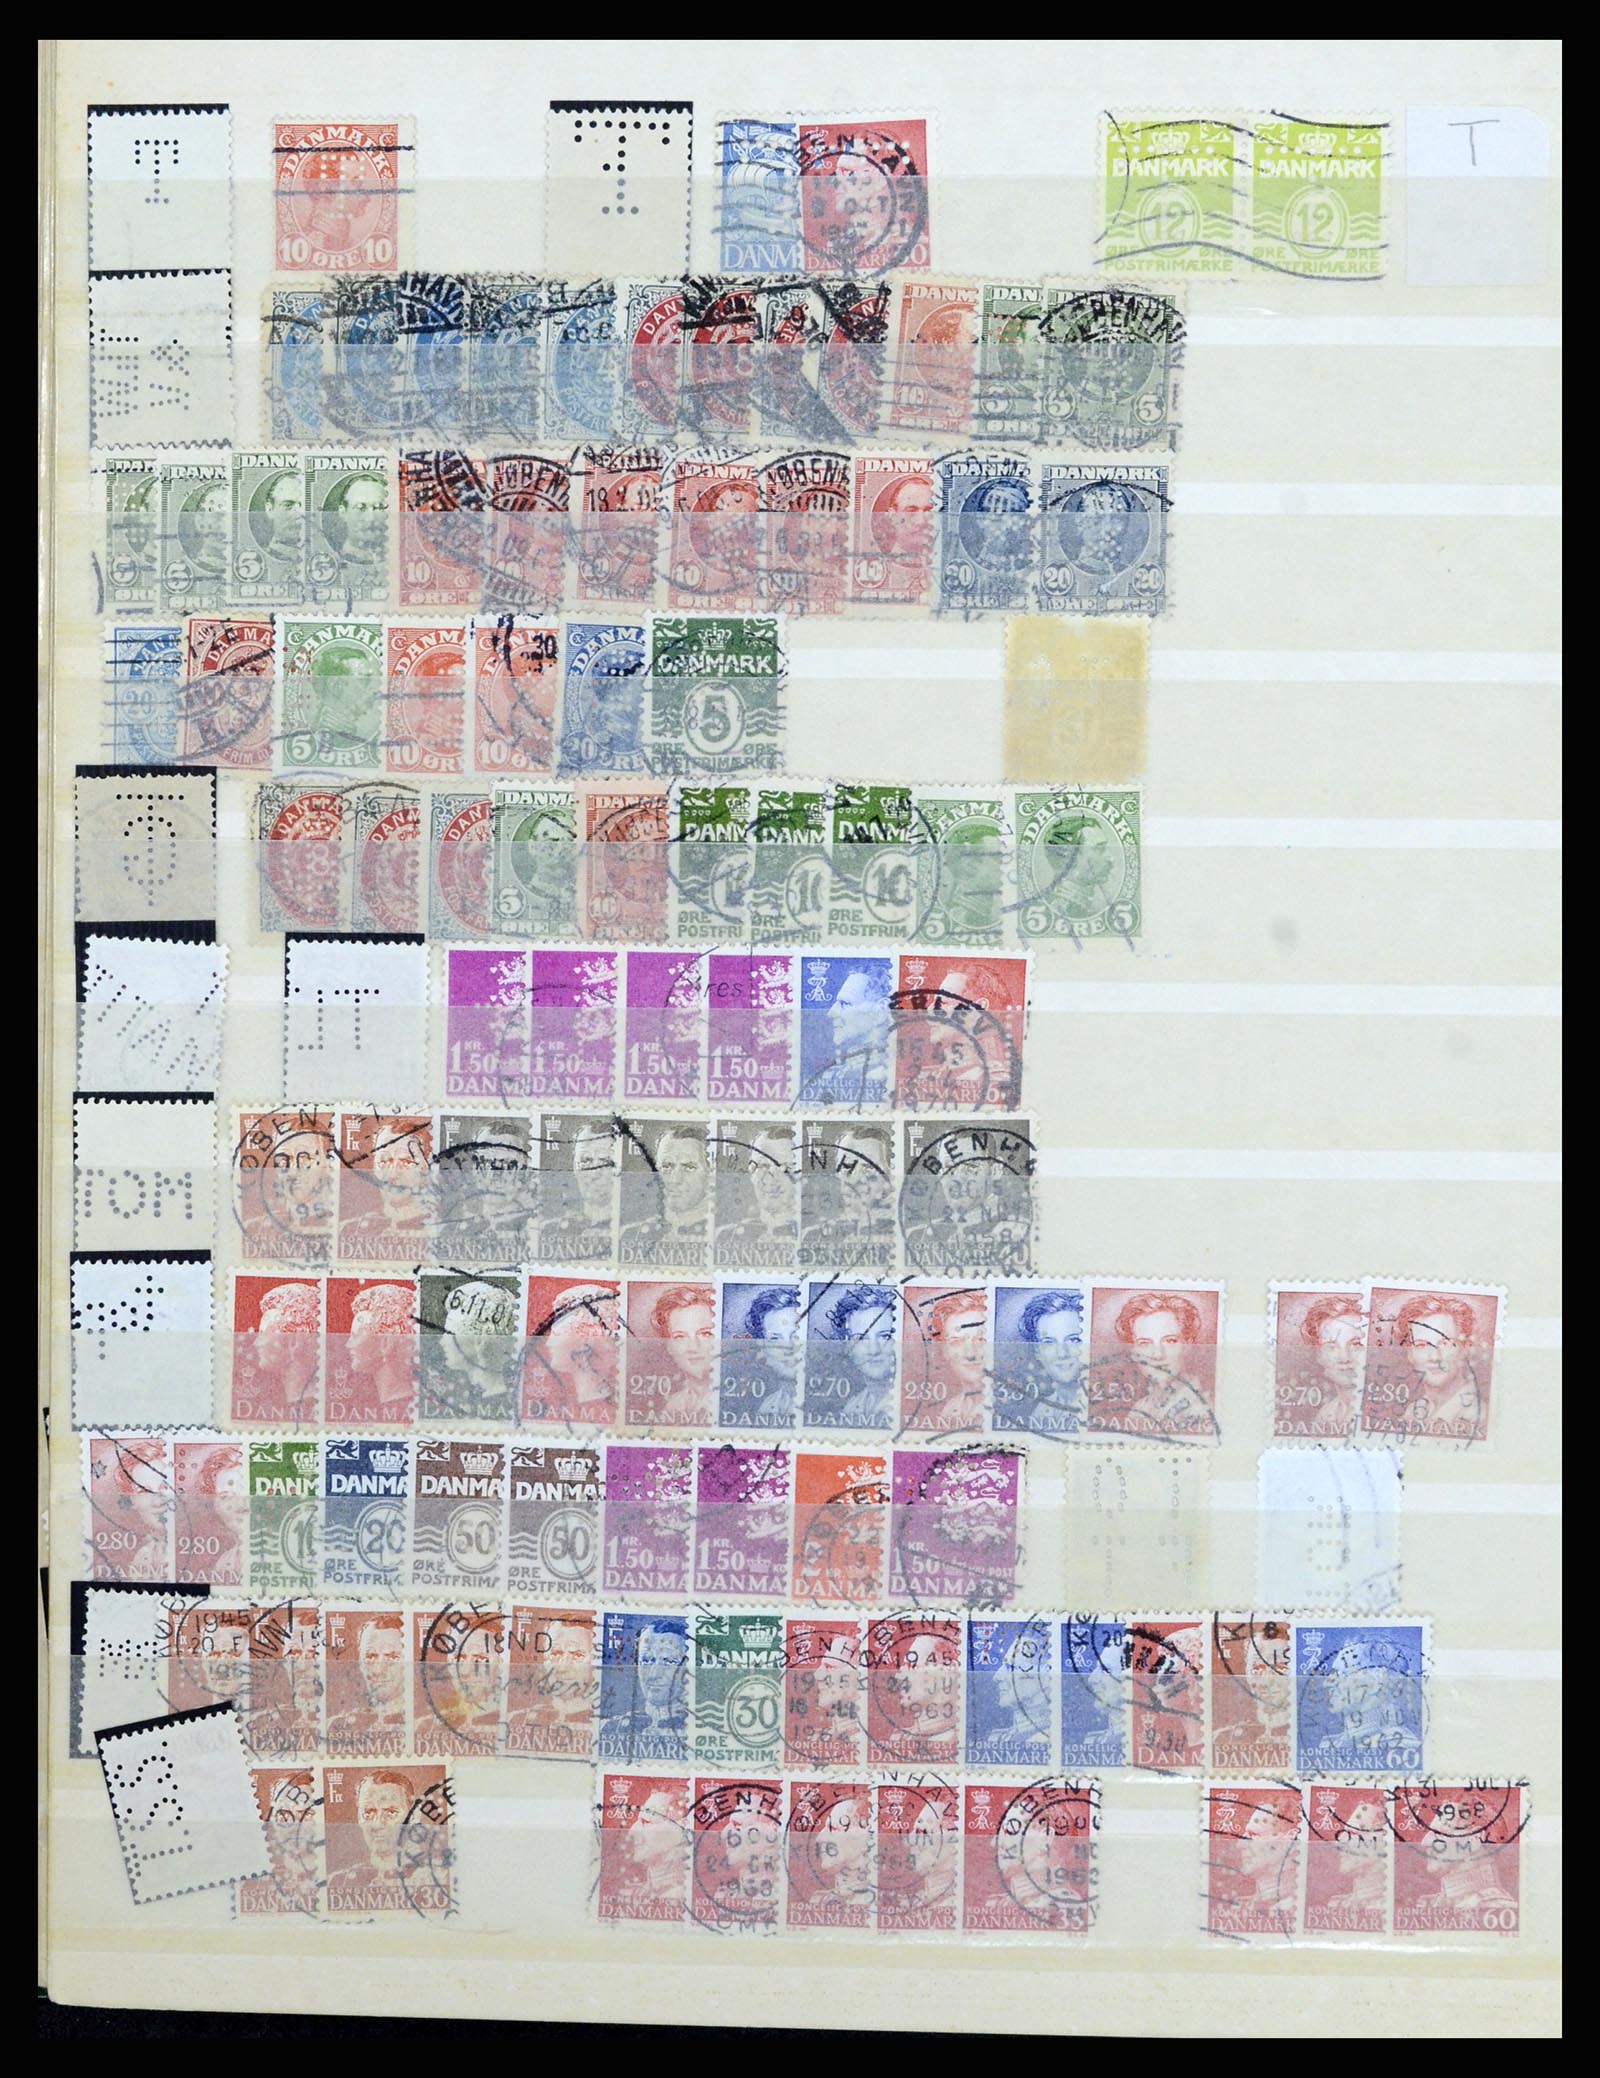 37056 090 - Stamp collection 37056 Denmark perfins.